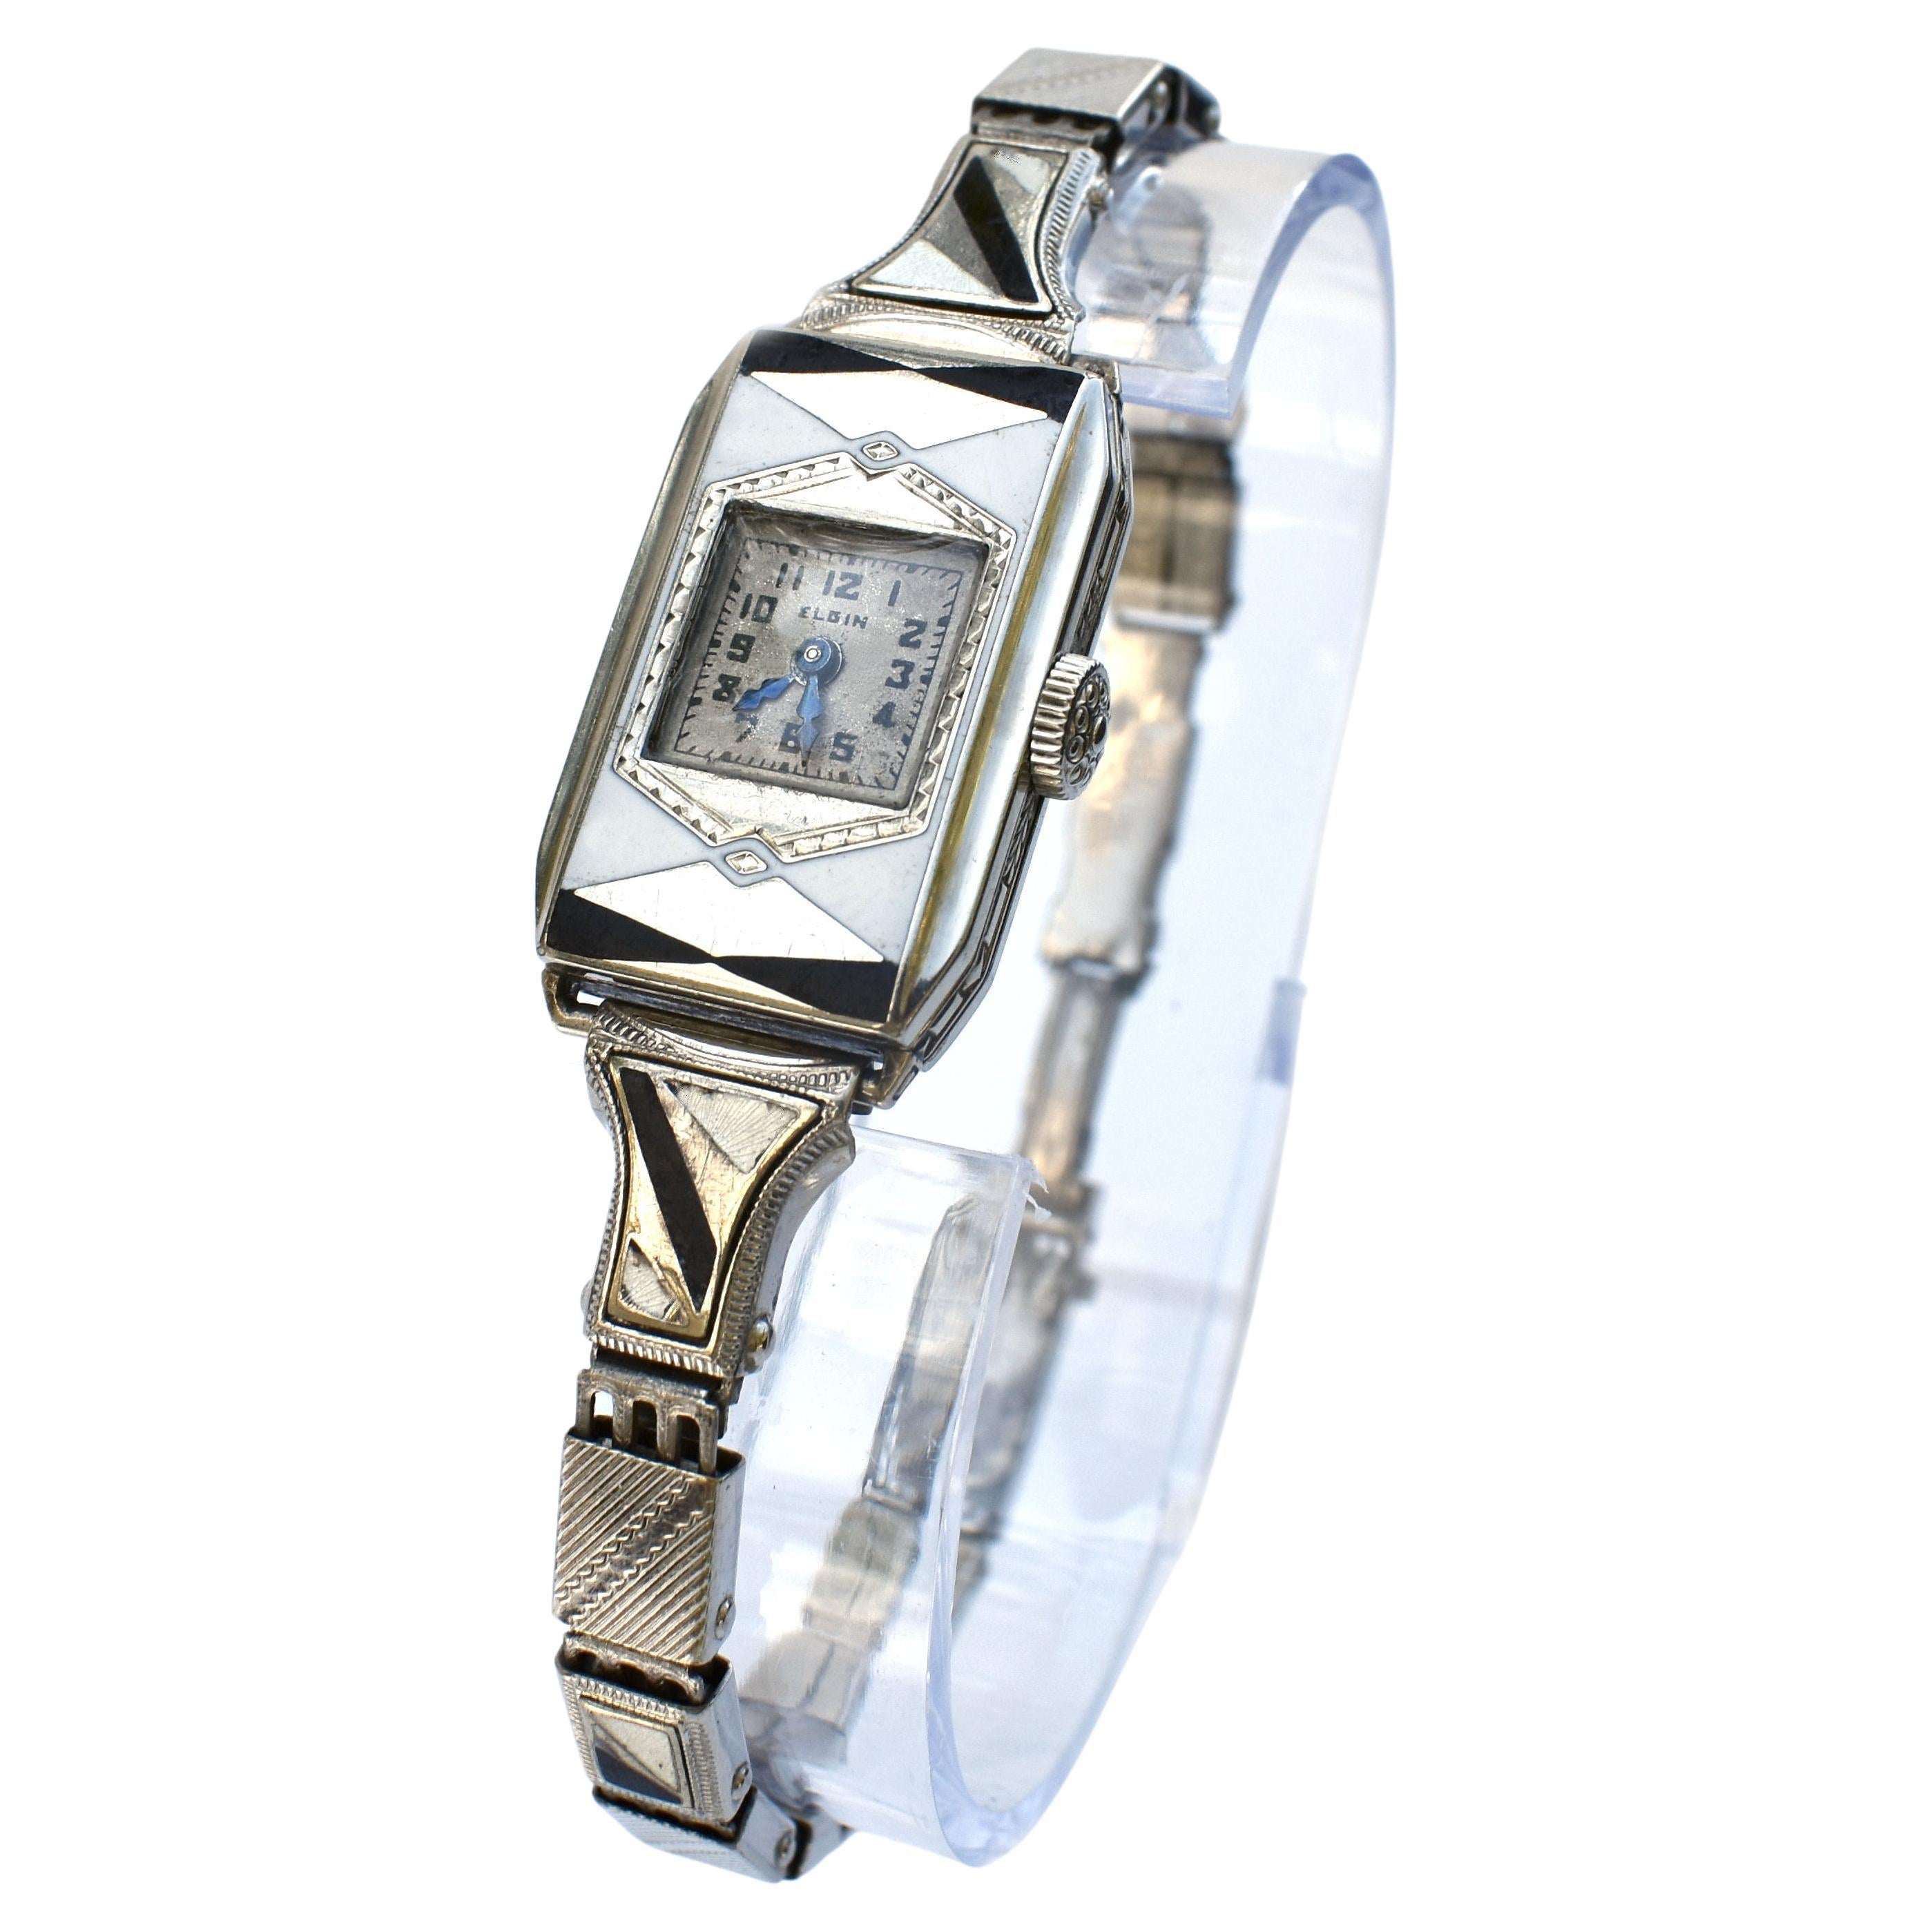 Art Deco Ladies Geometric Enamel Wrist Watch By Elgin, c1933, Newly Serviced.